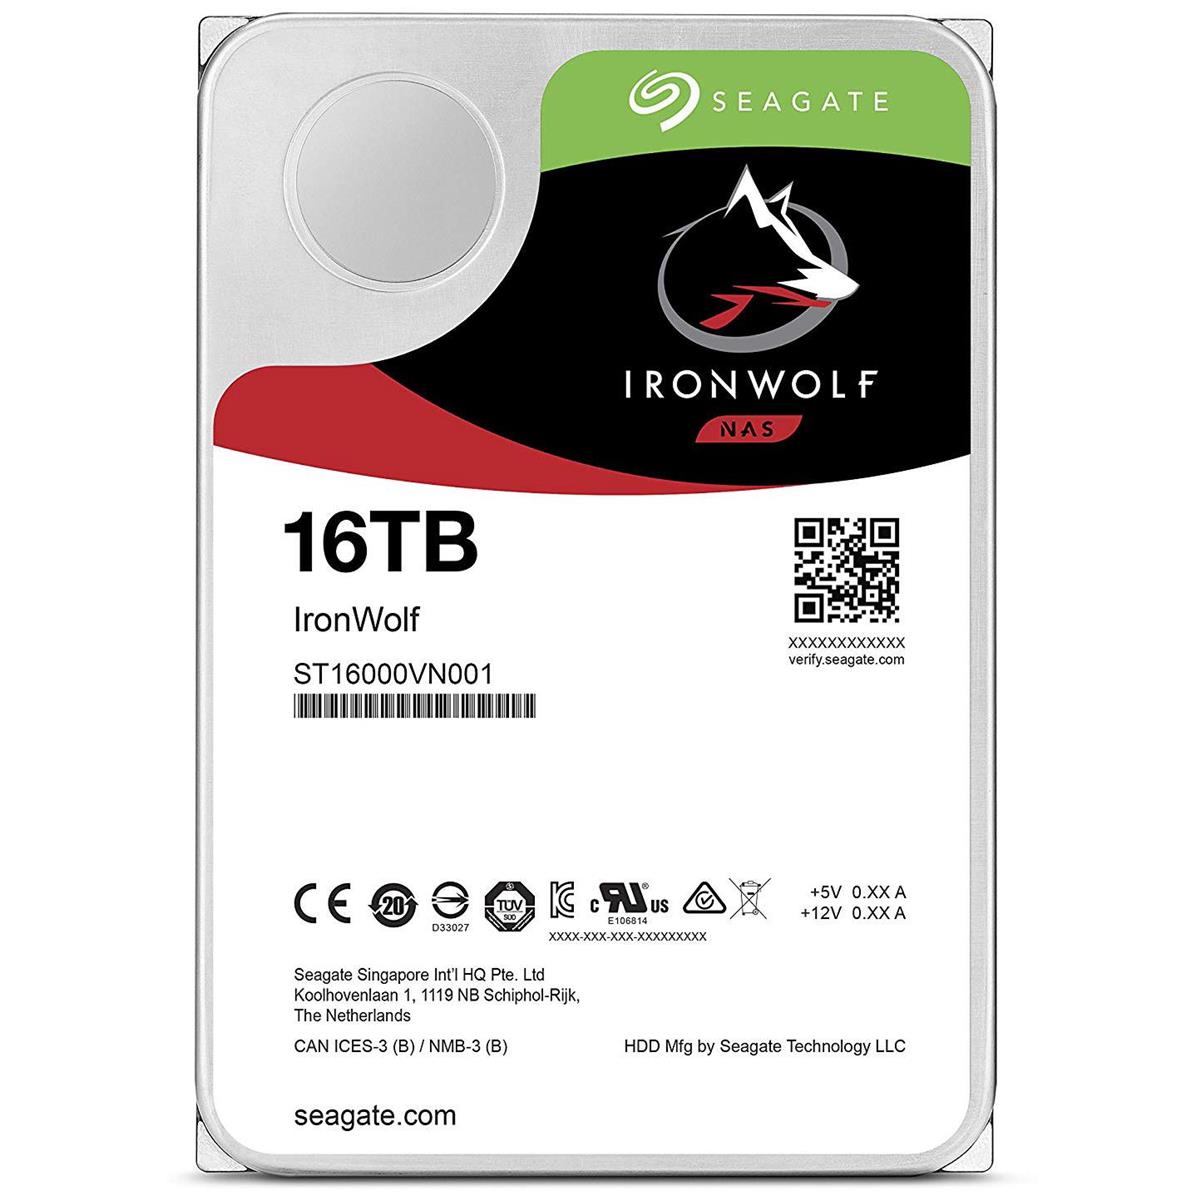 16TB Seagate IronWolf Pro 7200RPM Internal NAS HDD (CMR) $380 + free s/h at Adorama